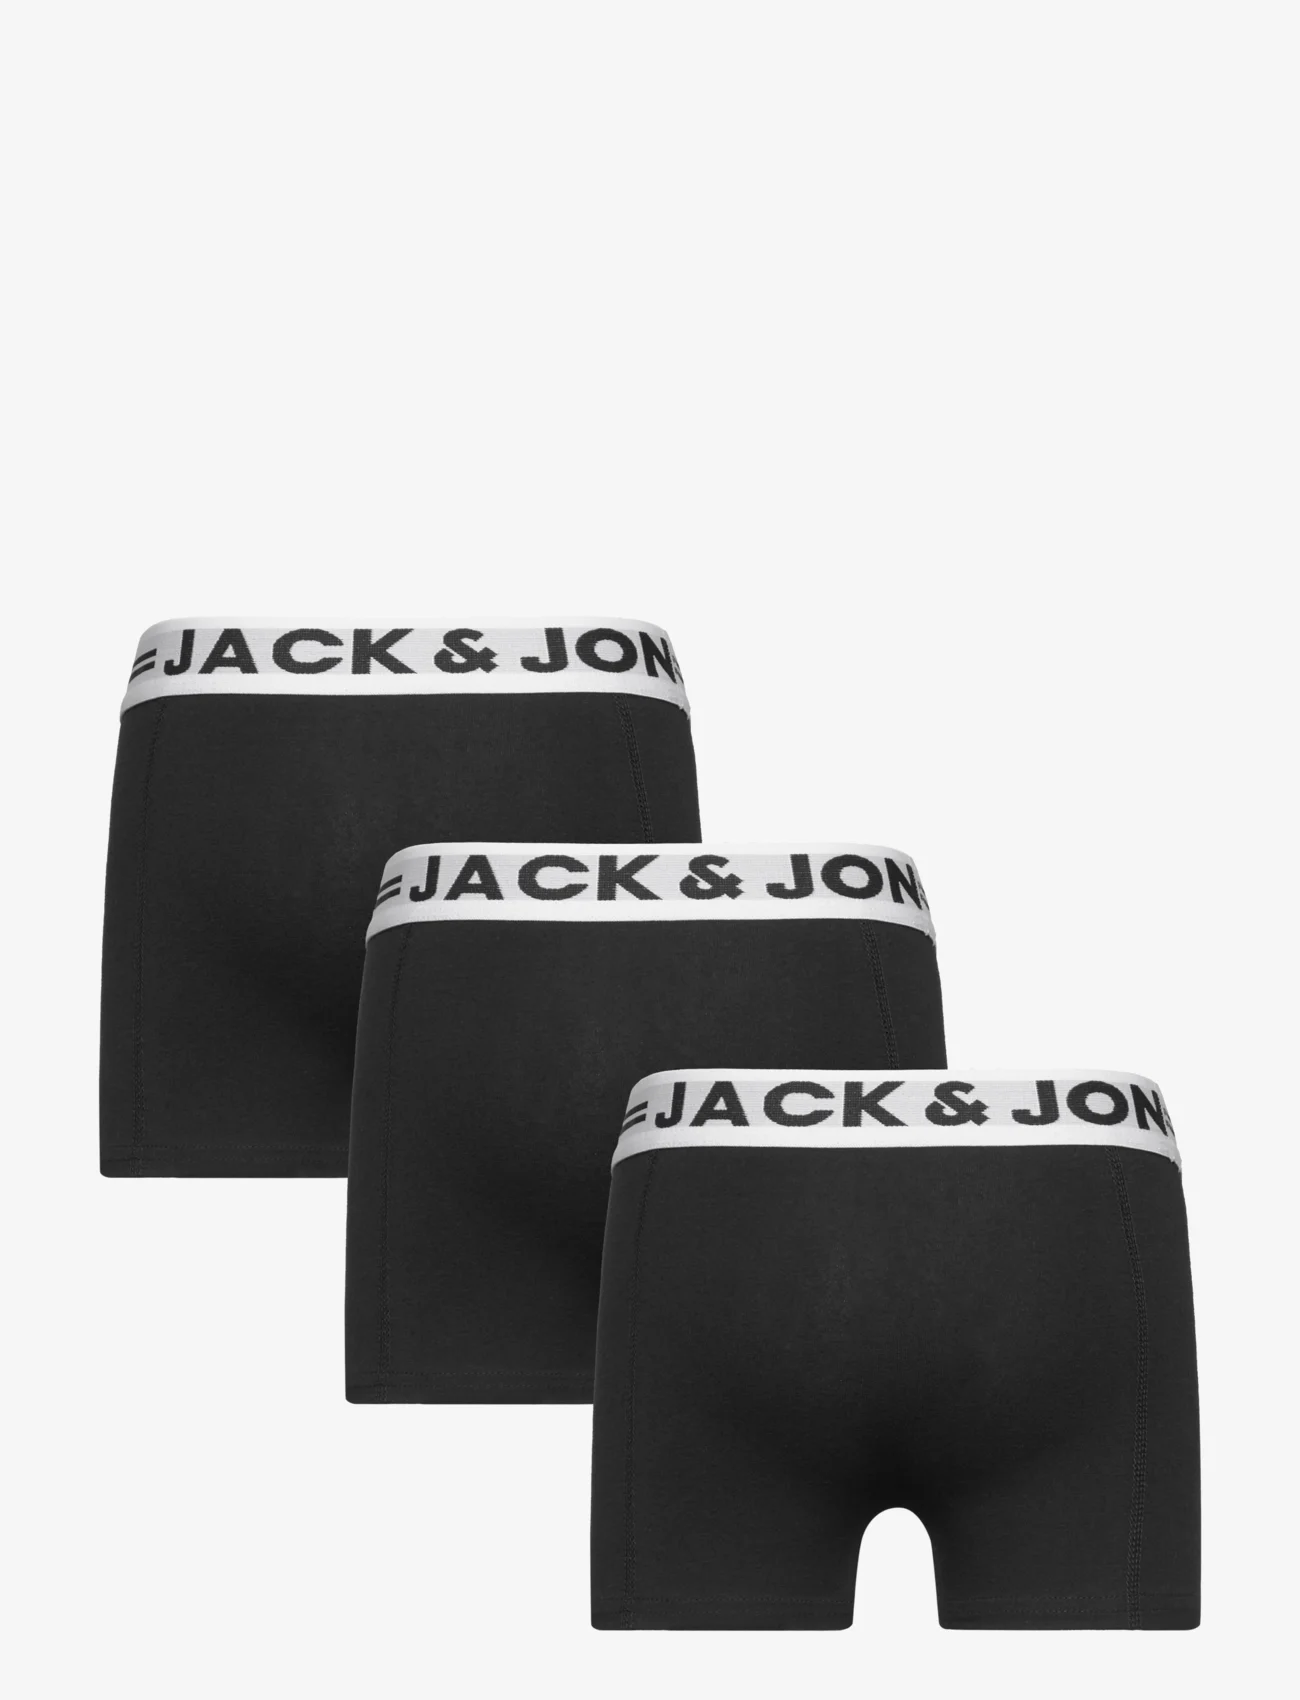 Jack & Jones - SENSE TRUNKS 3-PACK NOOS MNI - pesu - black - 1